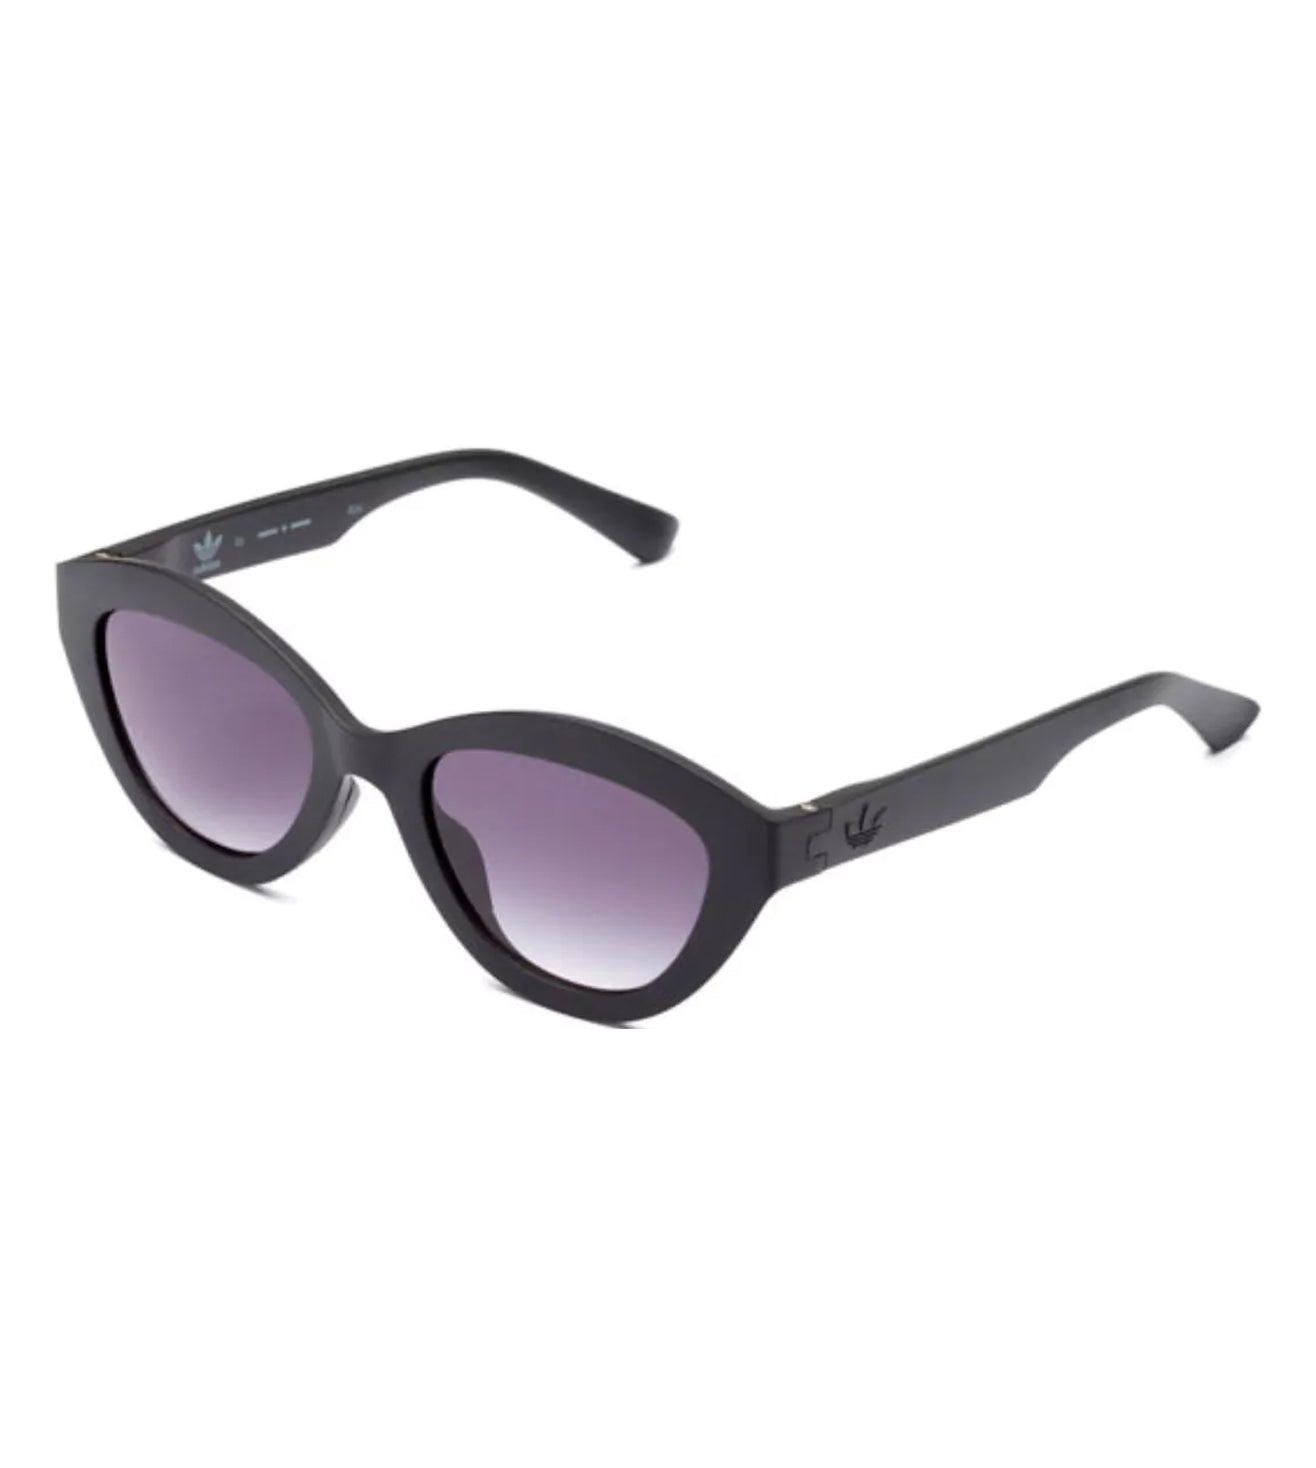 Adidas Originals Women's Grey Cat Eye Sunglasses